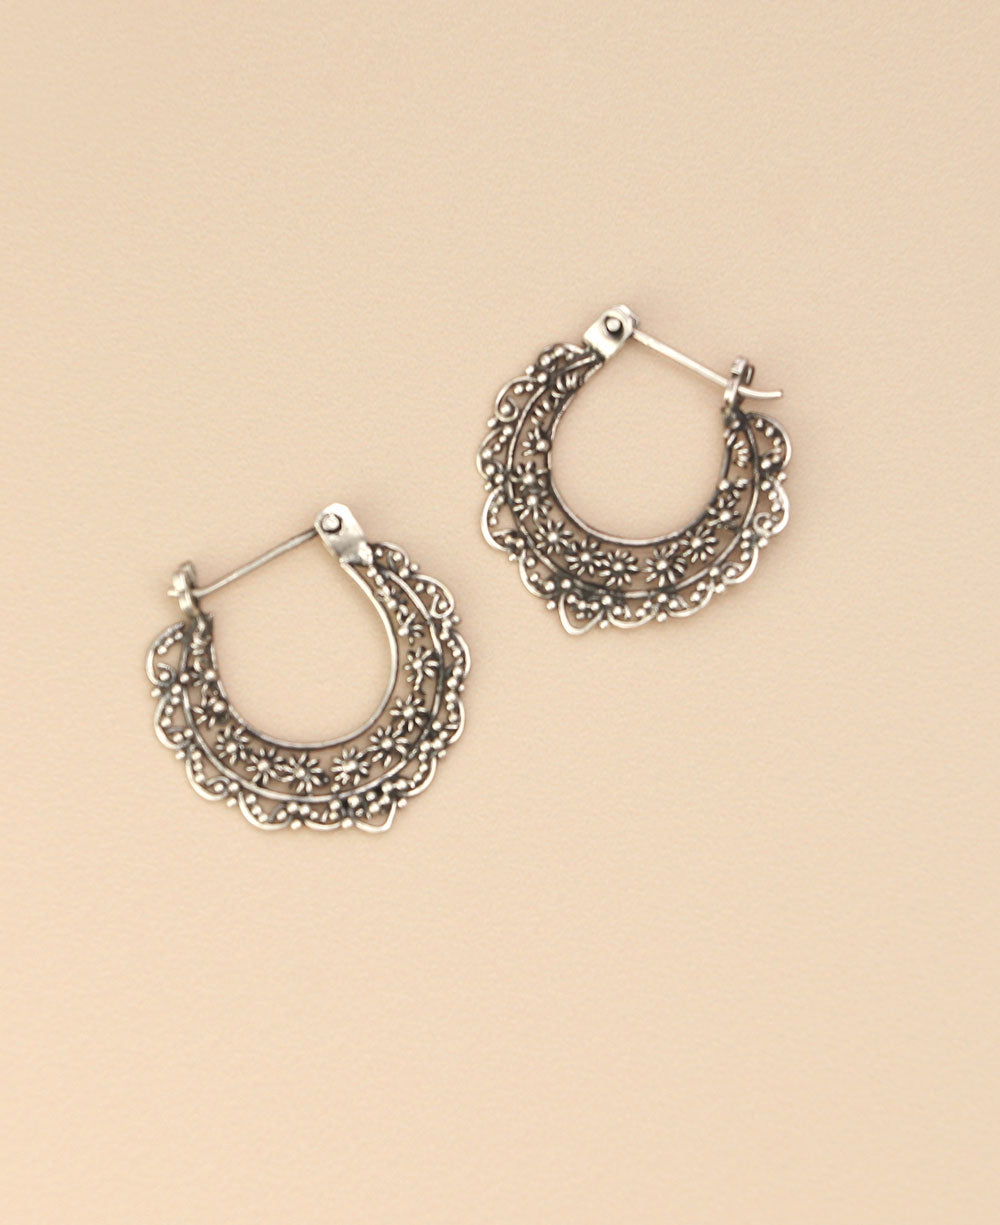 Fan-shaped filigree hoop earrings with floral details